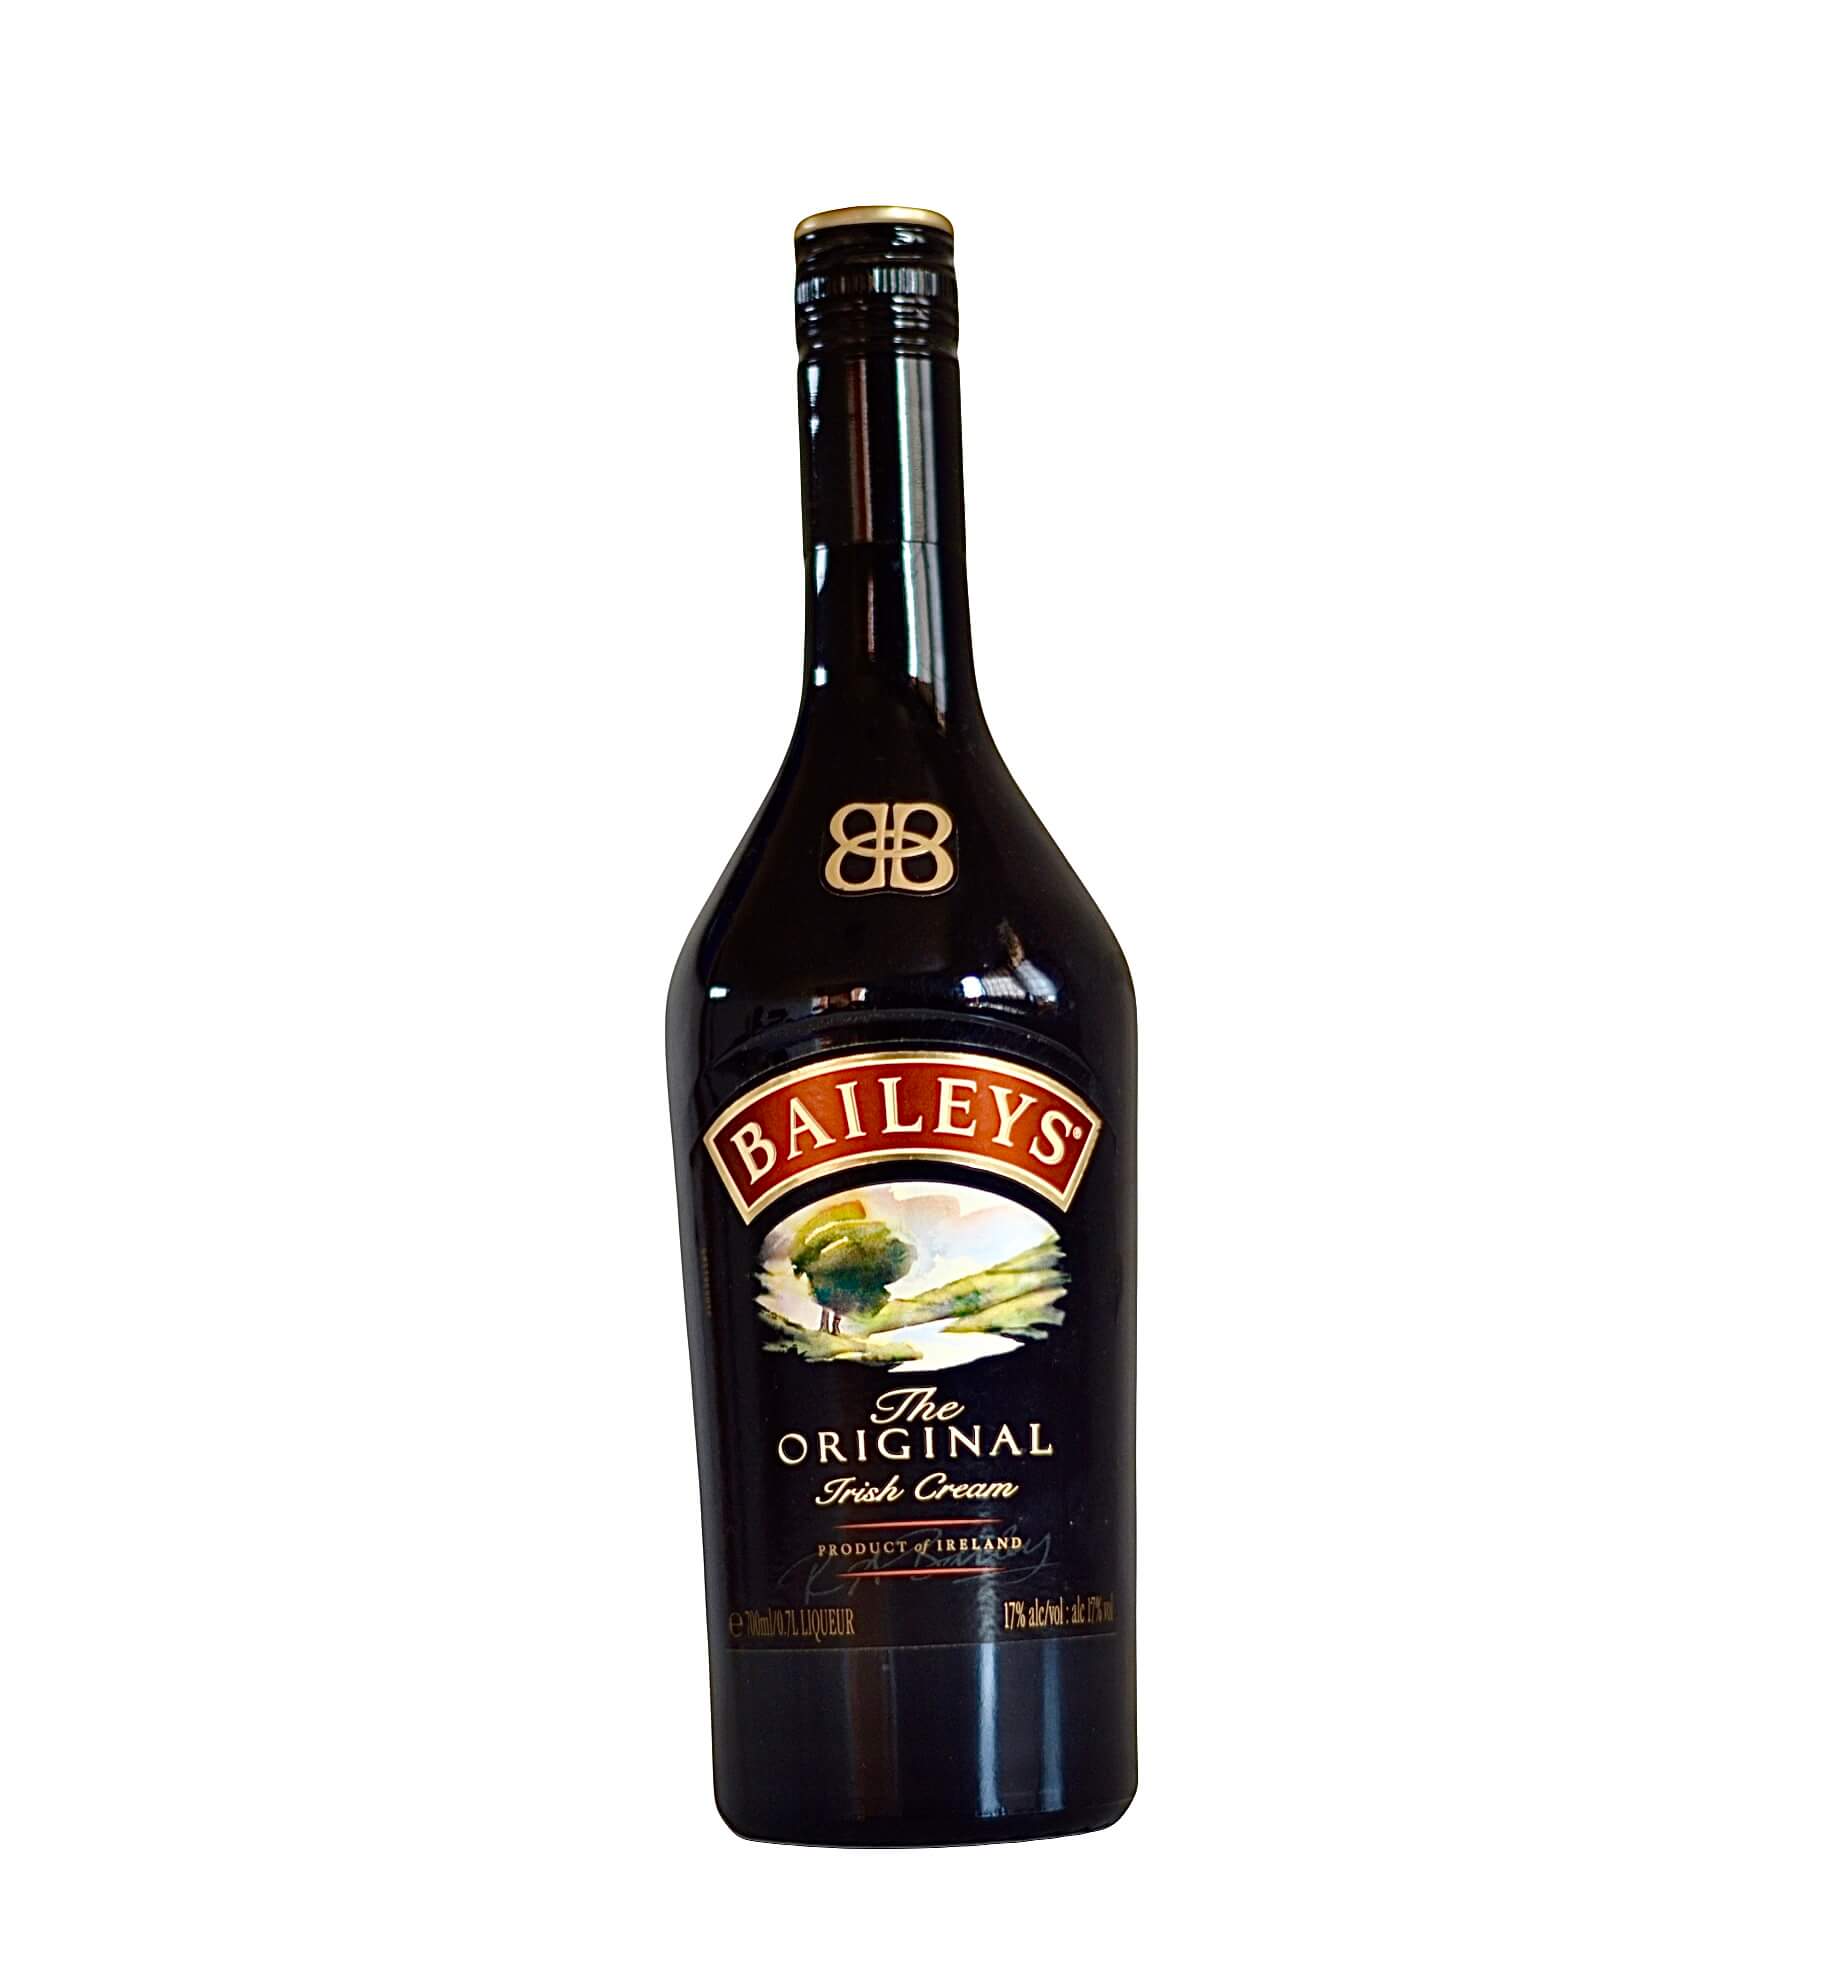 a bottle of Baileys Original Irish Cream